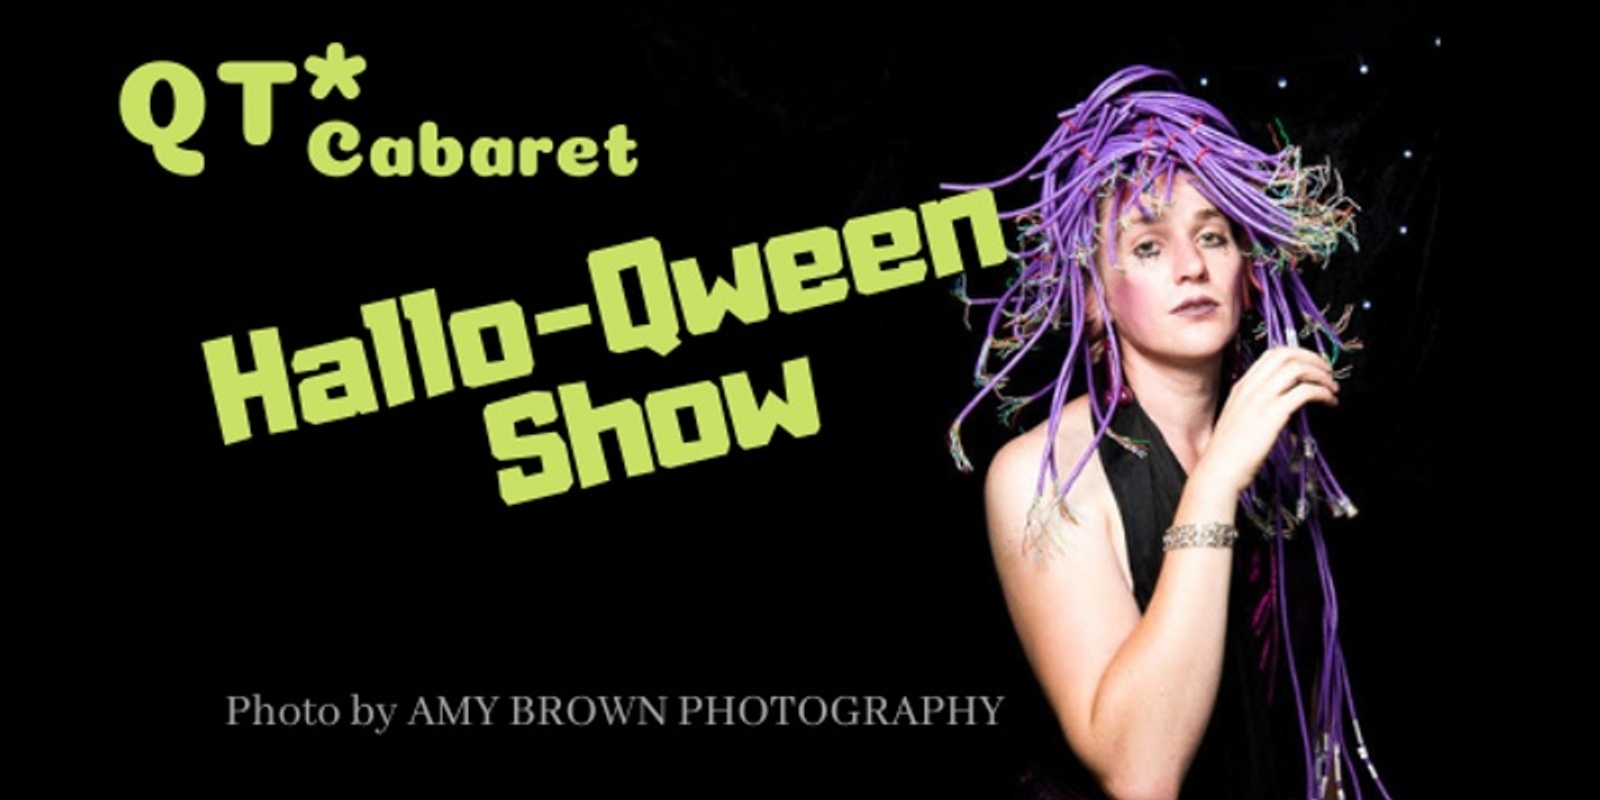 Banner image for QT* Hallo-Qween Cabaret